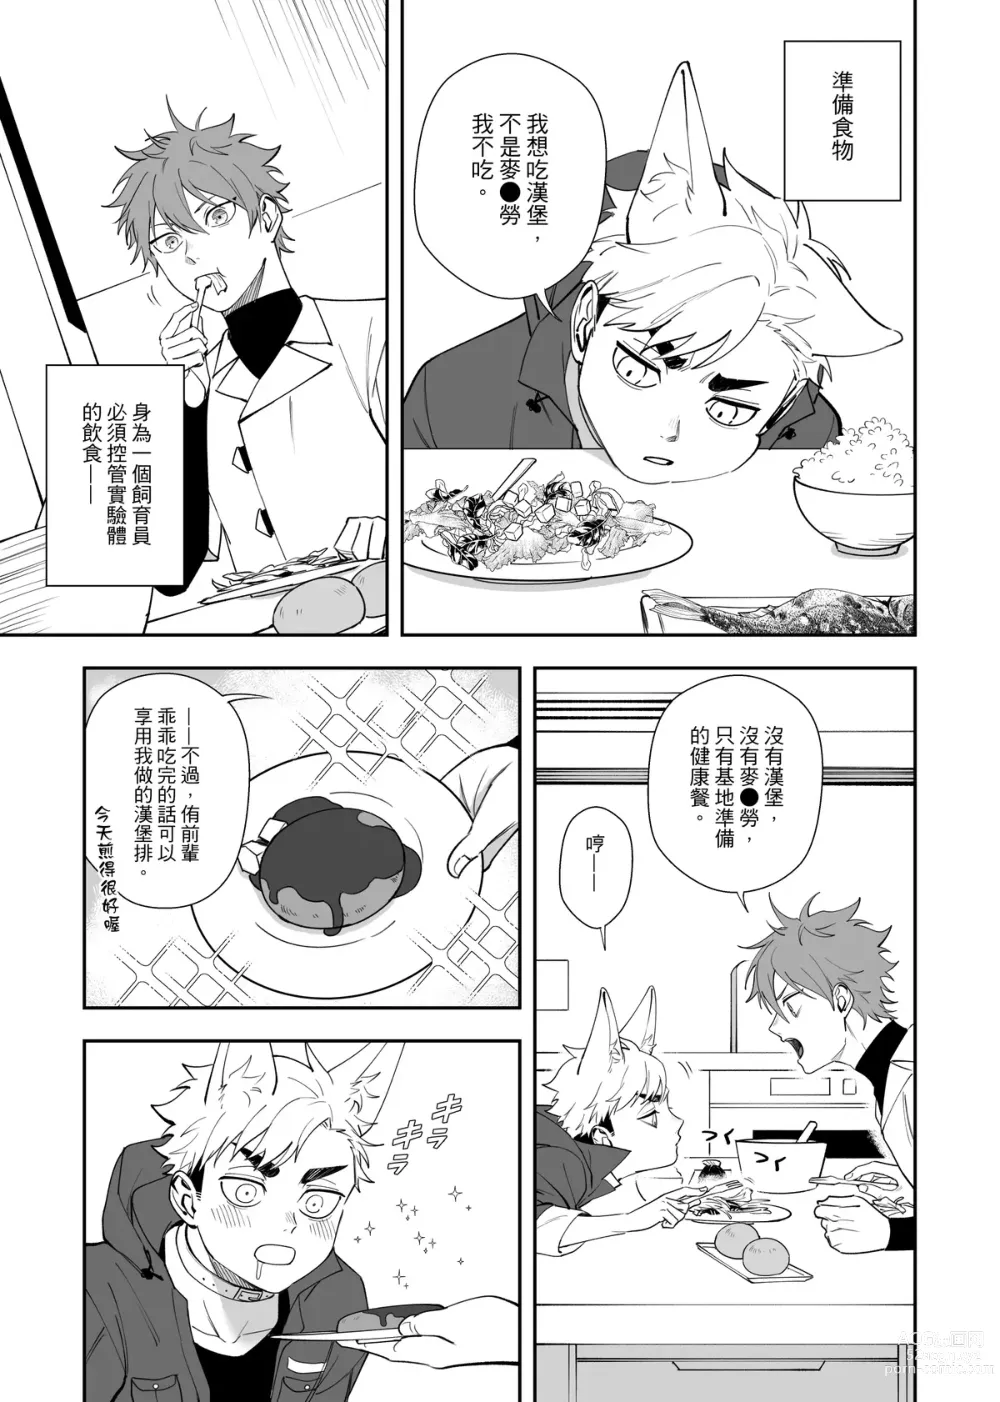 Page 6 of doujinshi 這是一個飼育員日常